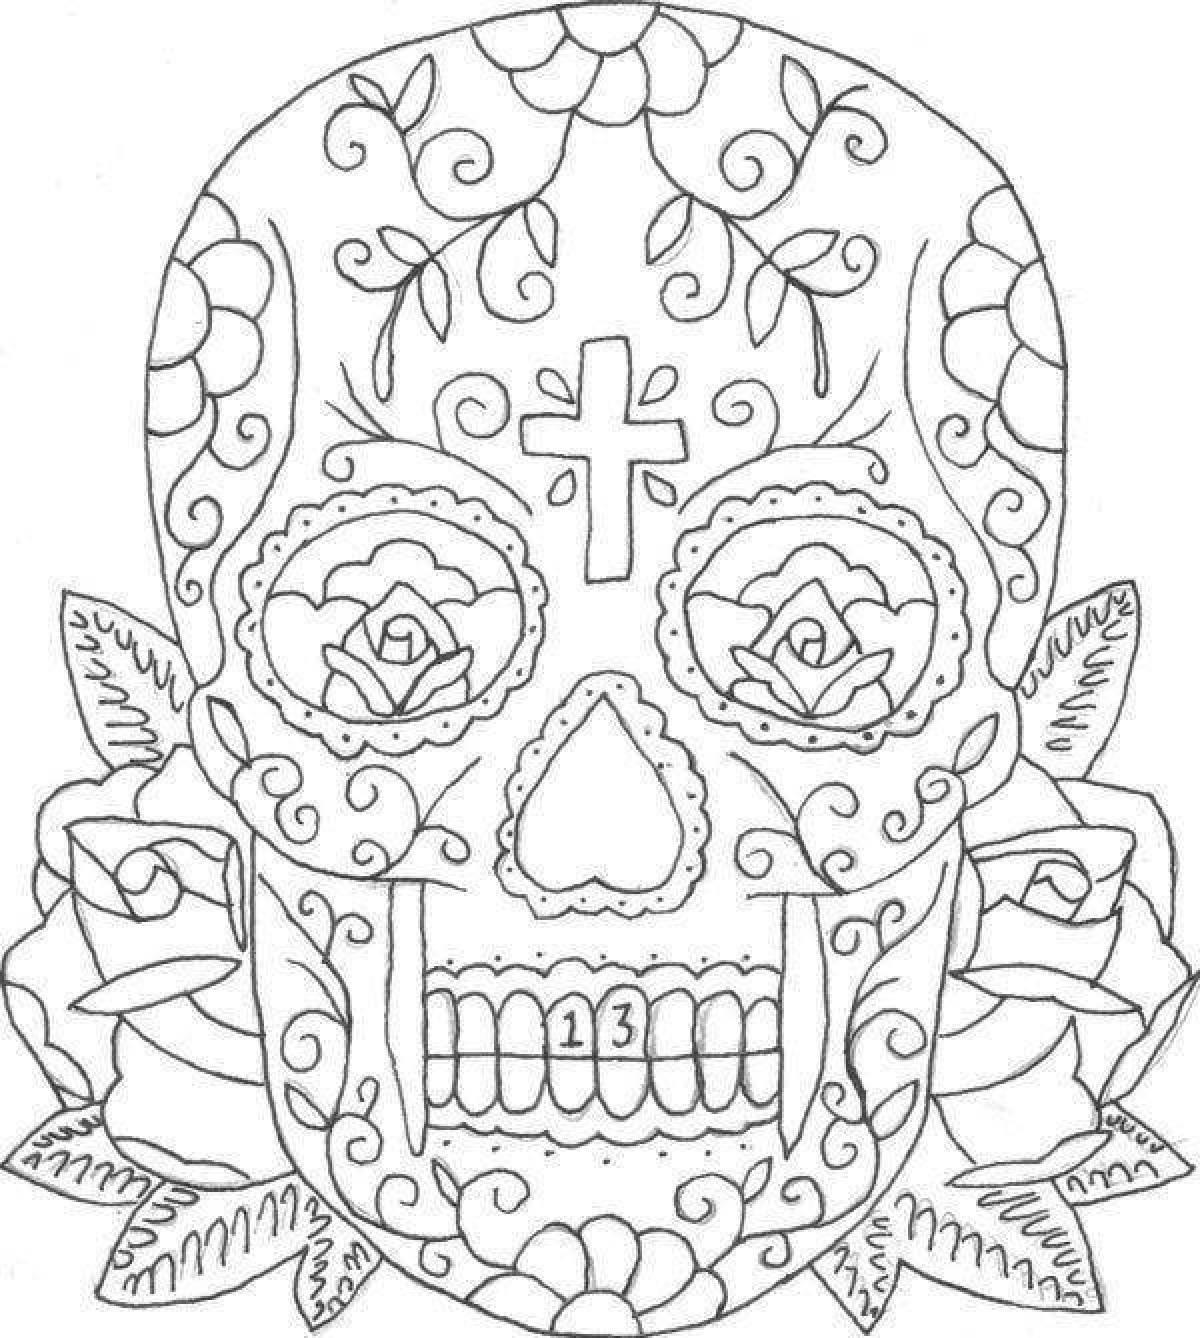 Fancy coloring skull